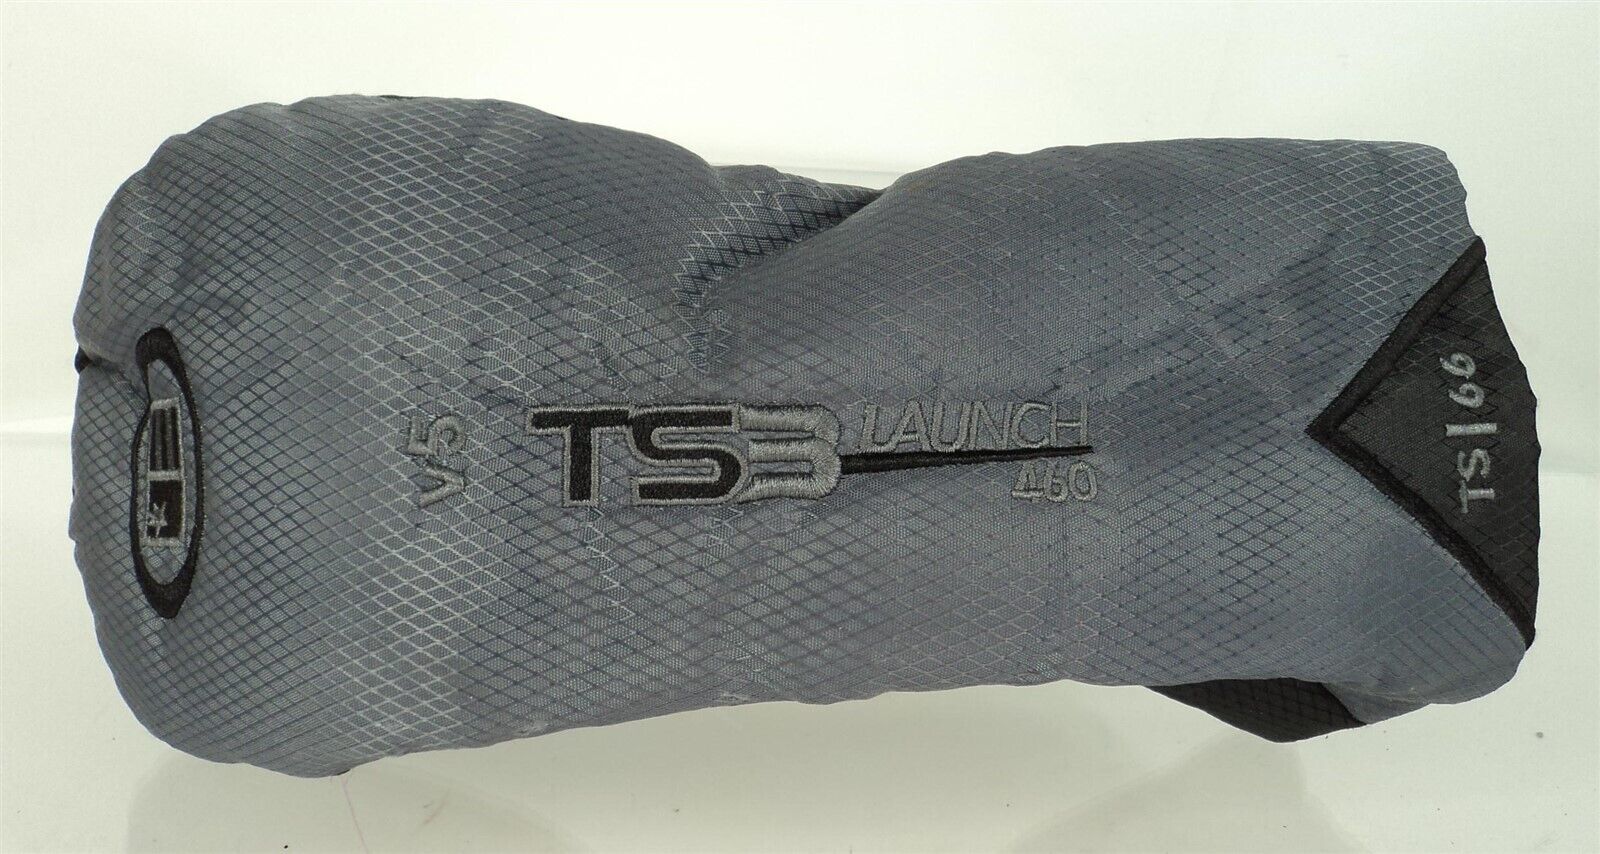 TS3 Launch 460 V5 TS/66 Gray Golf Club Head Cover - $12.59